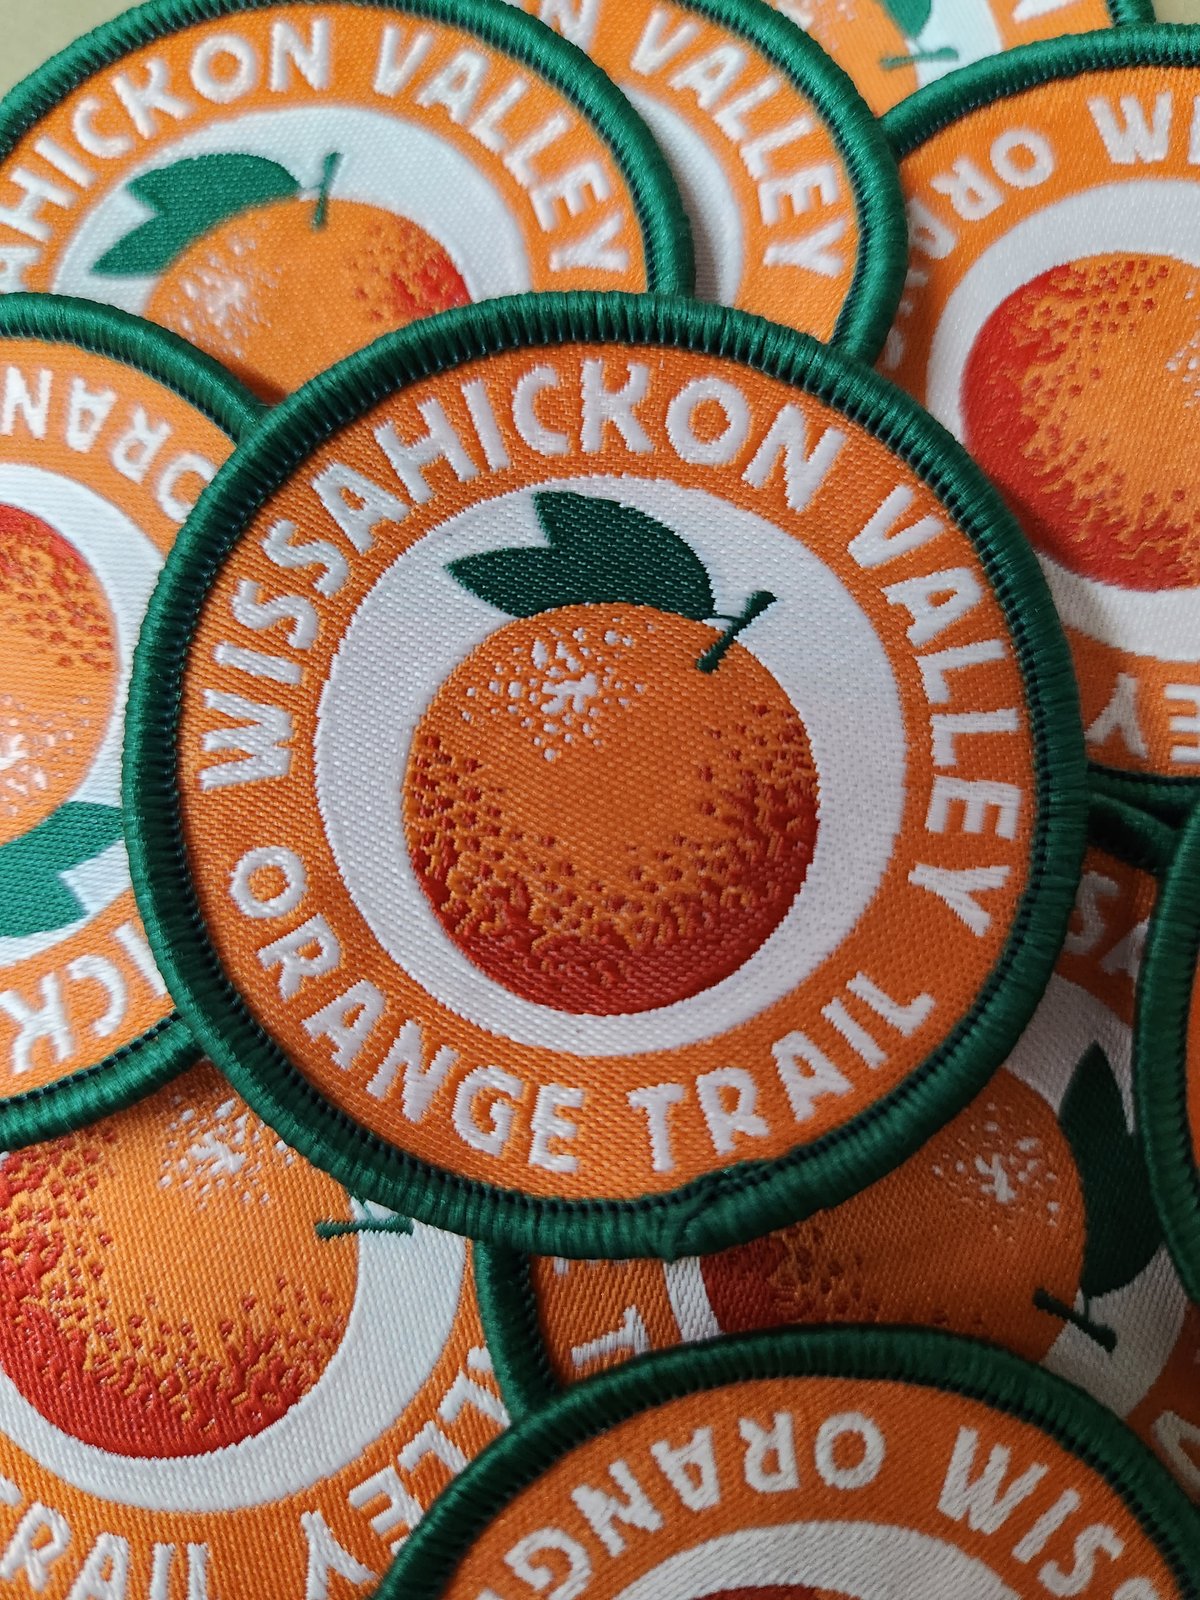 Image of Wissahickon Orange Trail patch